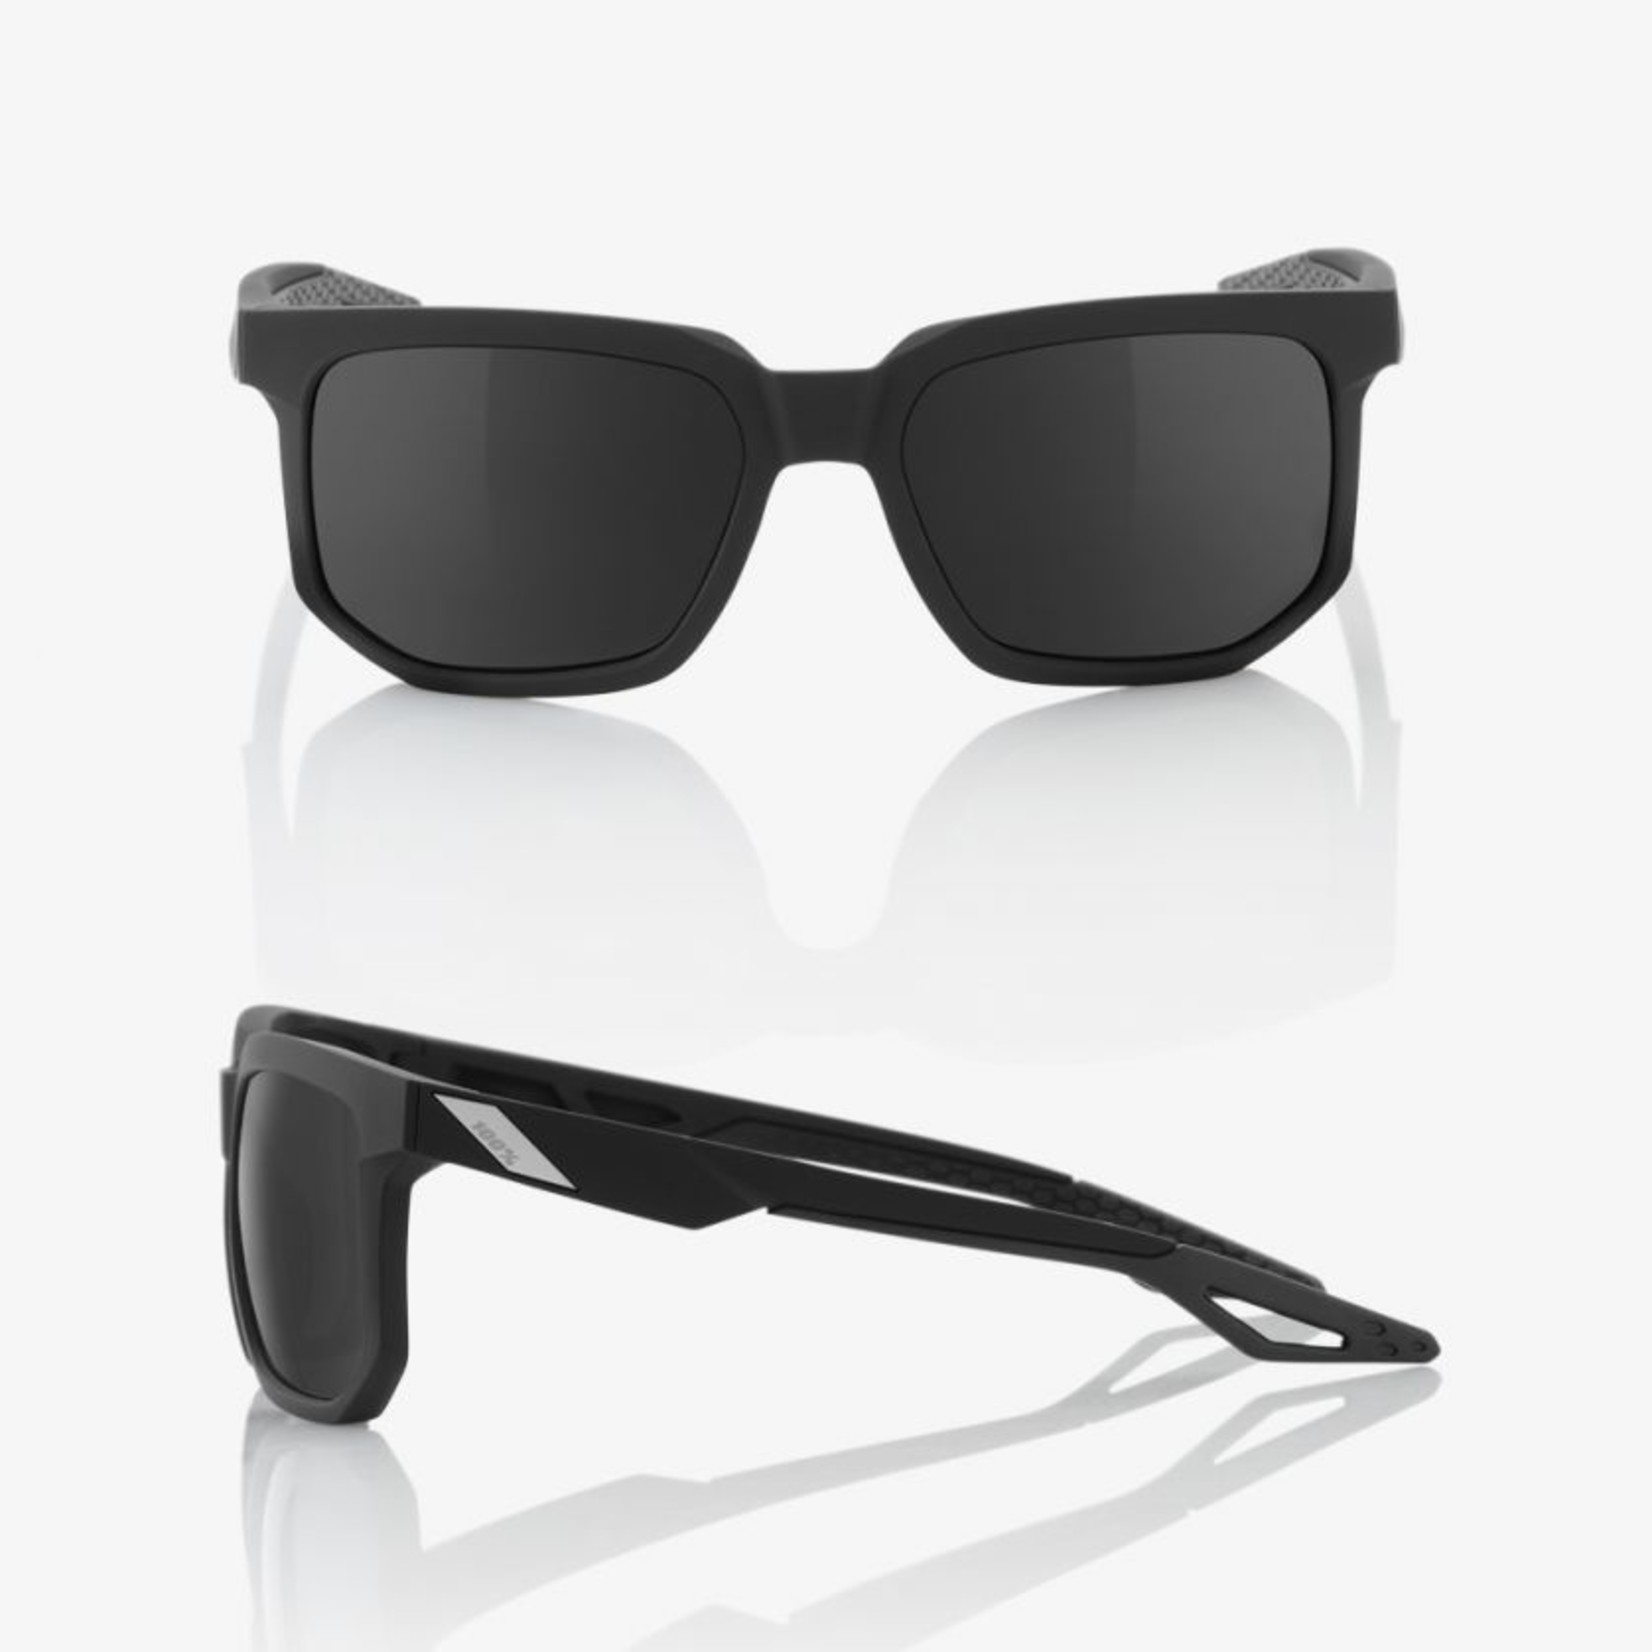 100 Percent 100% Centric 100% UV Protection Bike Sunglasses Matte Black - Smoke Lens